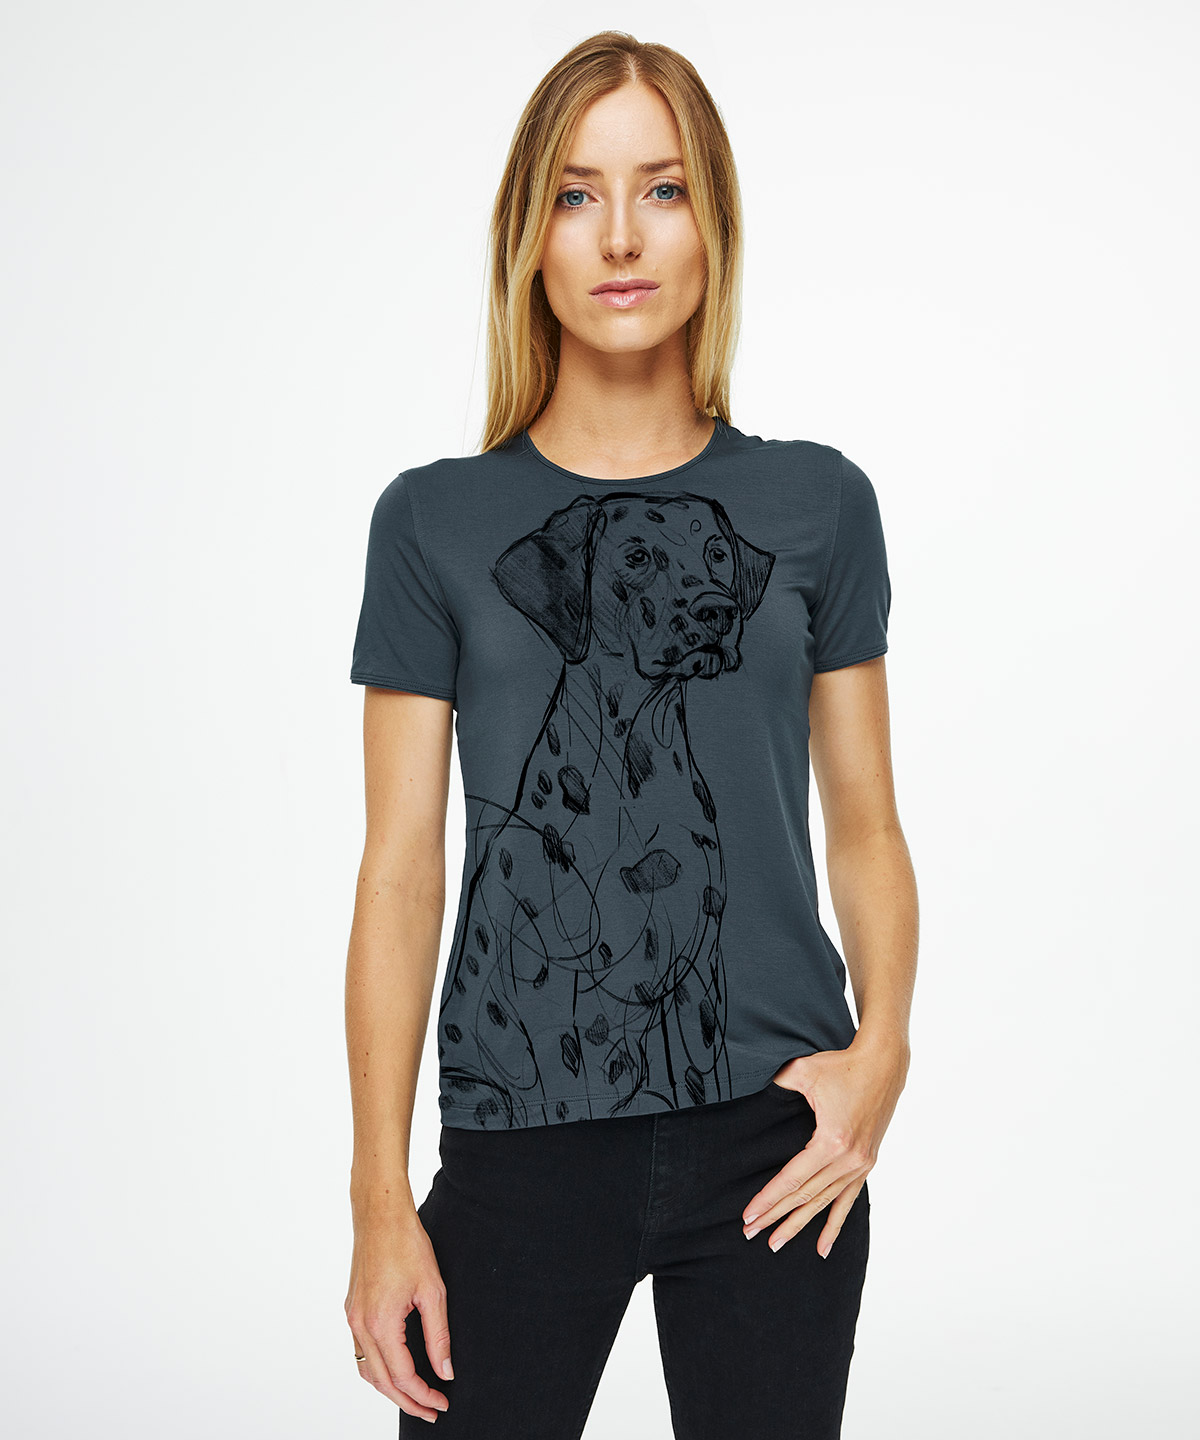 Dalmatian dark cool gray t-shirt woman